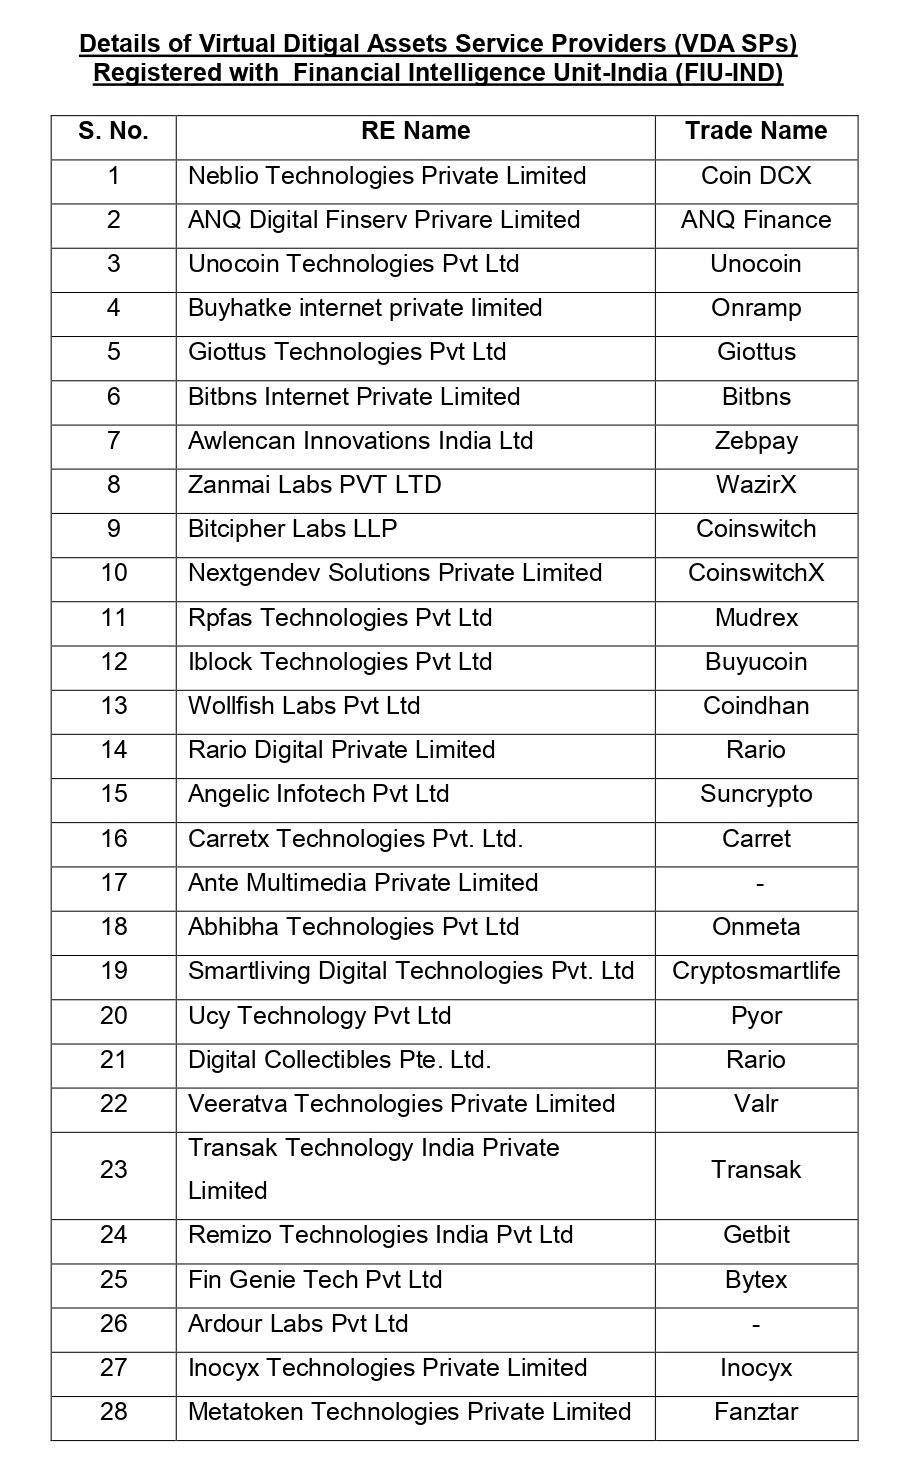 28 crypto platforms register with FIU-India: MoS Finance in Lok Sabha - BusinessToday